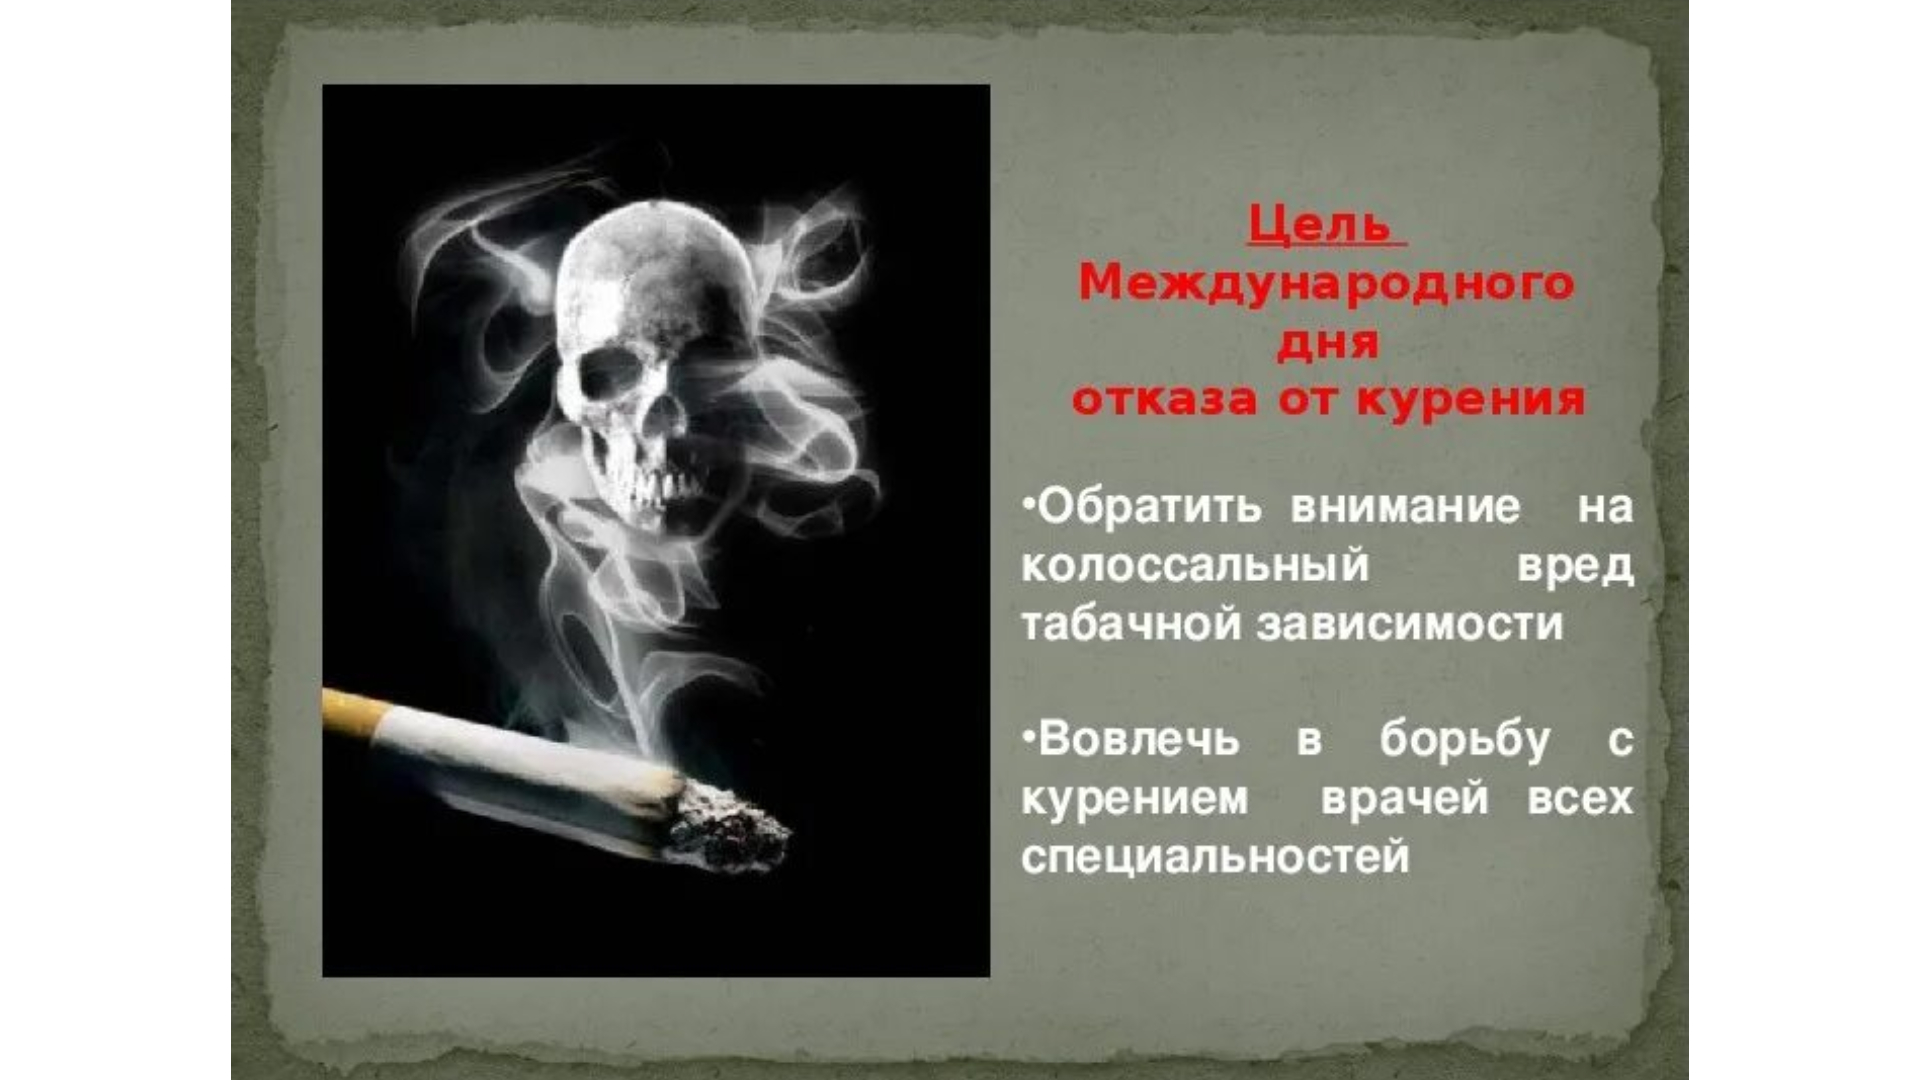 Презентация против курения